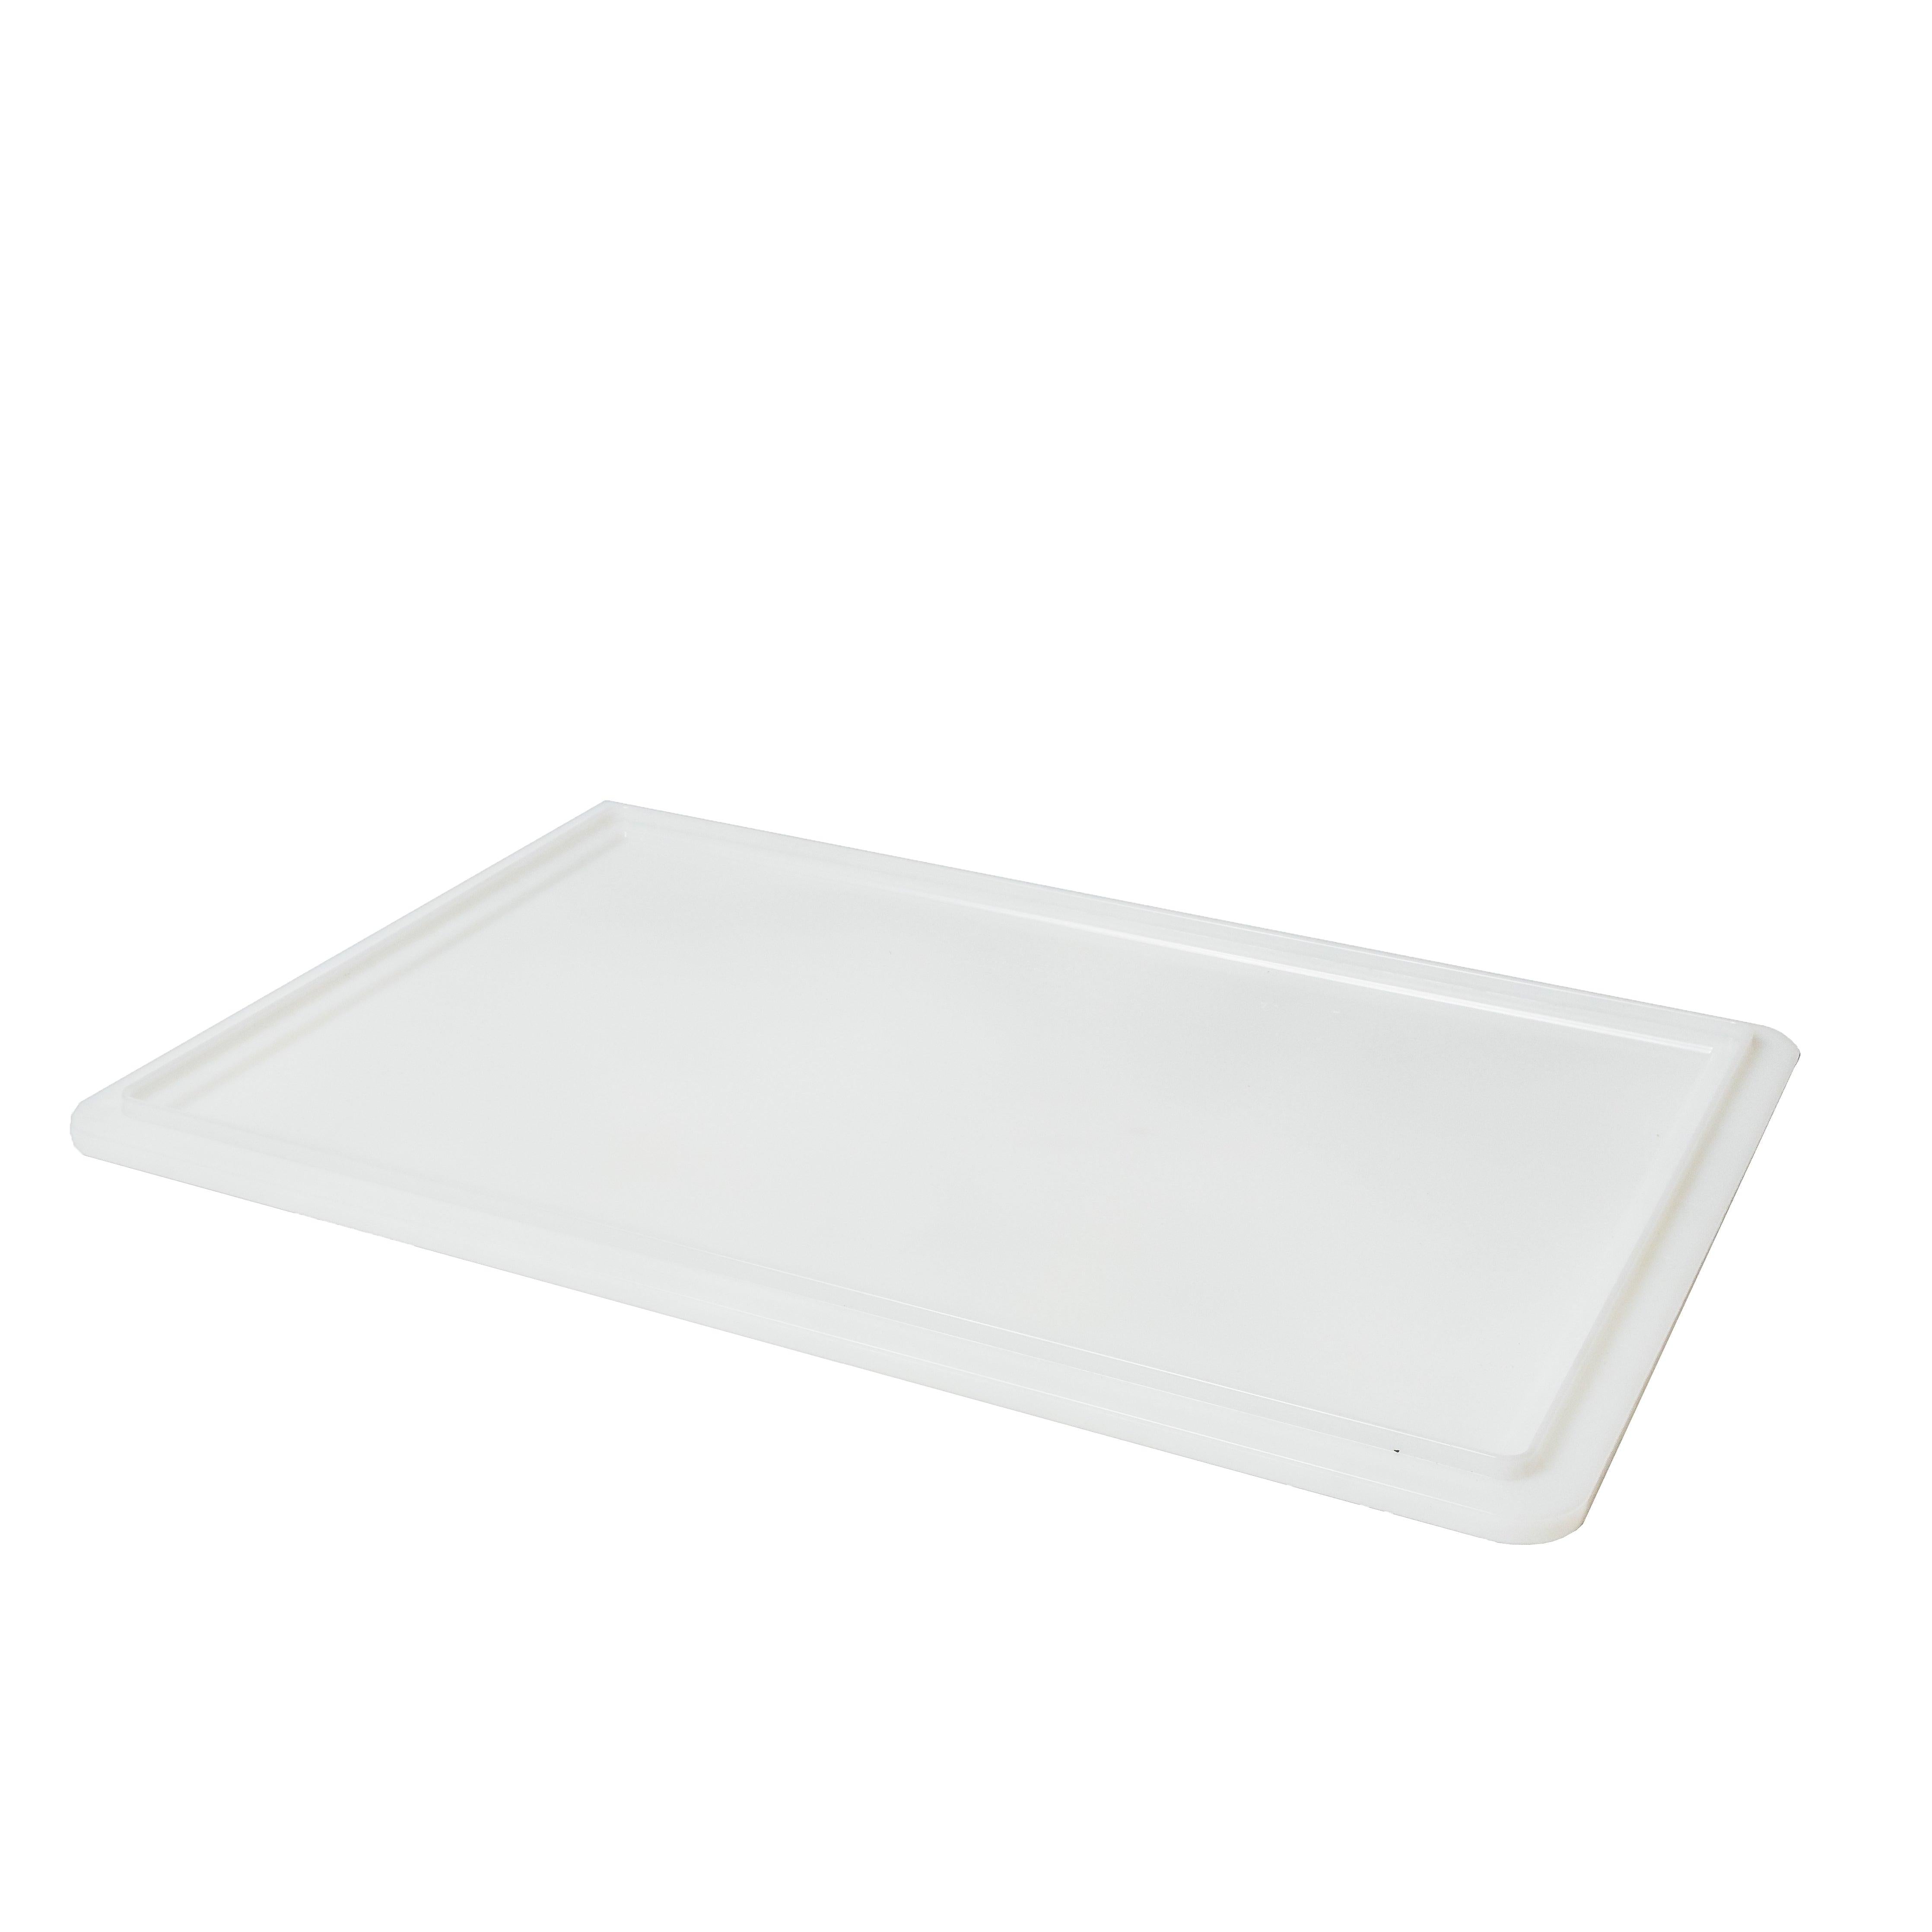 100002W - Dough box lid white color - AMPTO